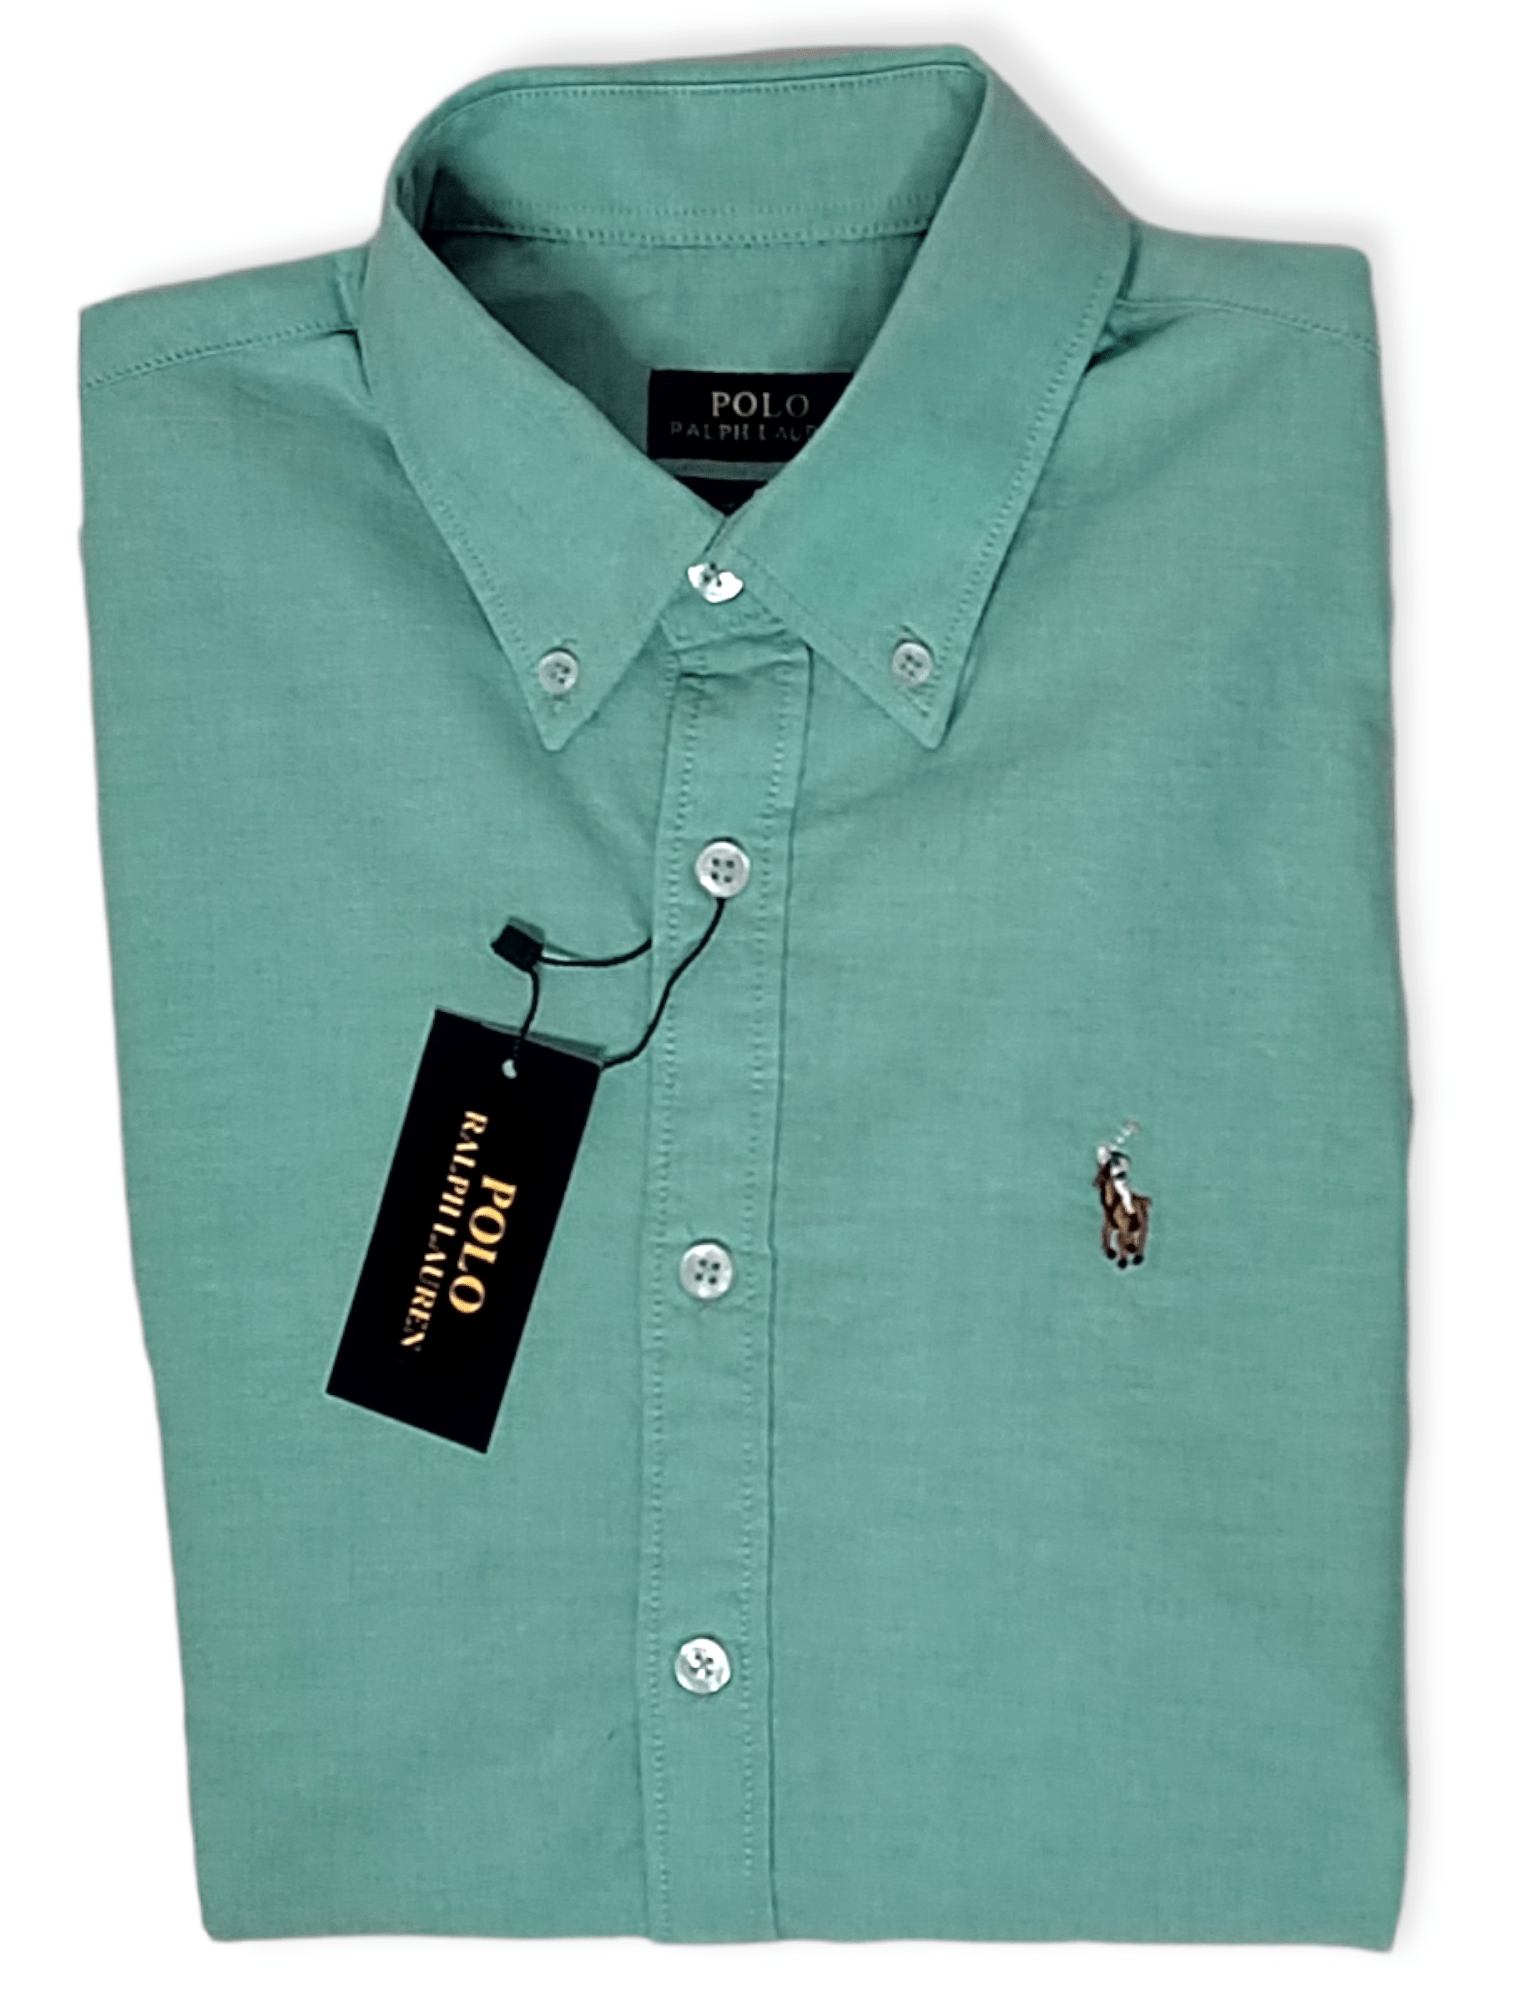 ElOutlet - Men Summer Shirts Men (local Polo) Shirt (Slim-Fit) - Green